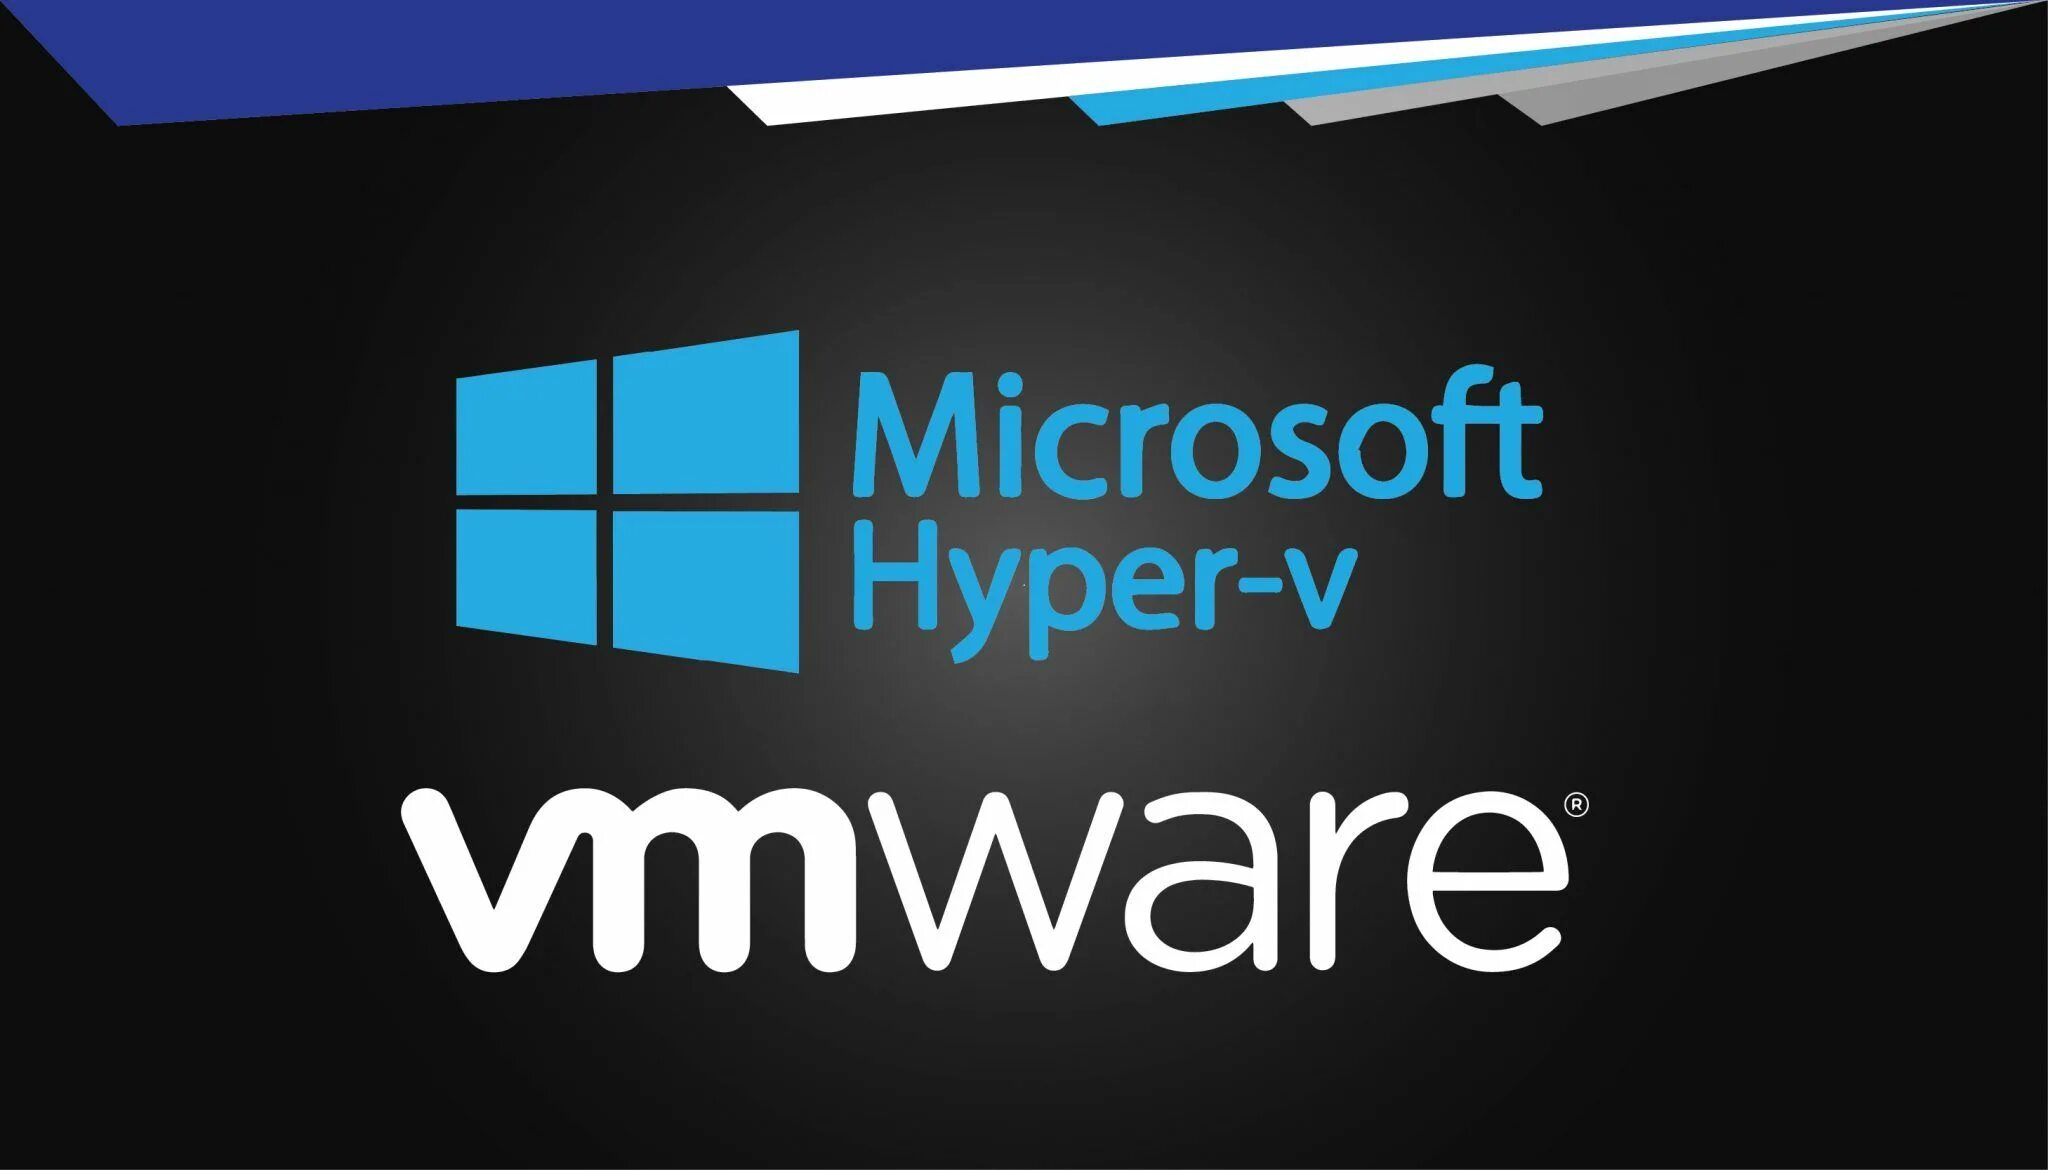 Hyper-v. Виртуализация Hyper-v. Гипервизор Microsoft Hyper-v. Microsoft Hyper-v logo. Plugin hyper os